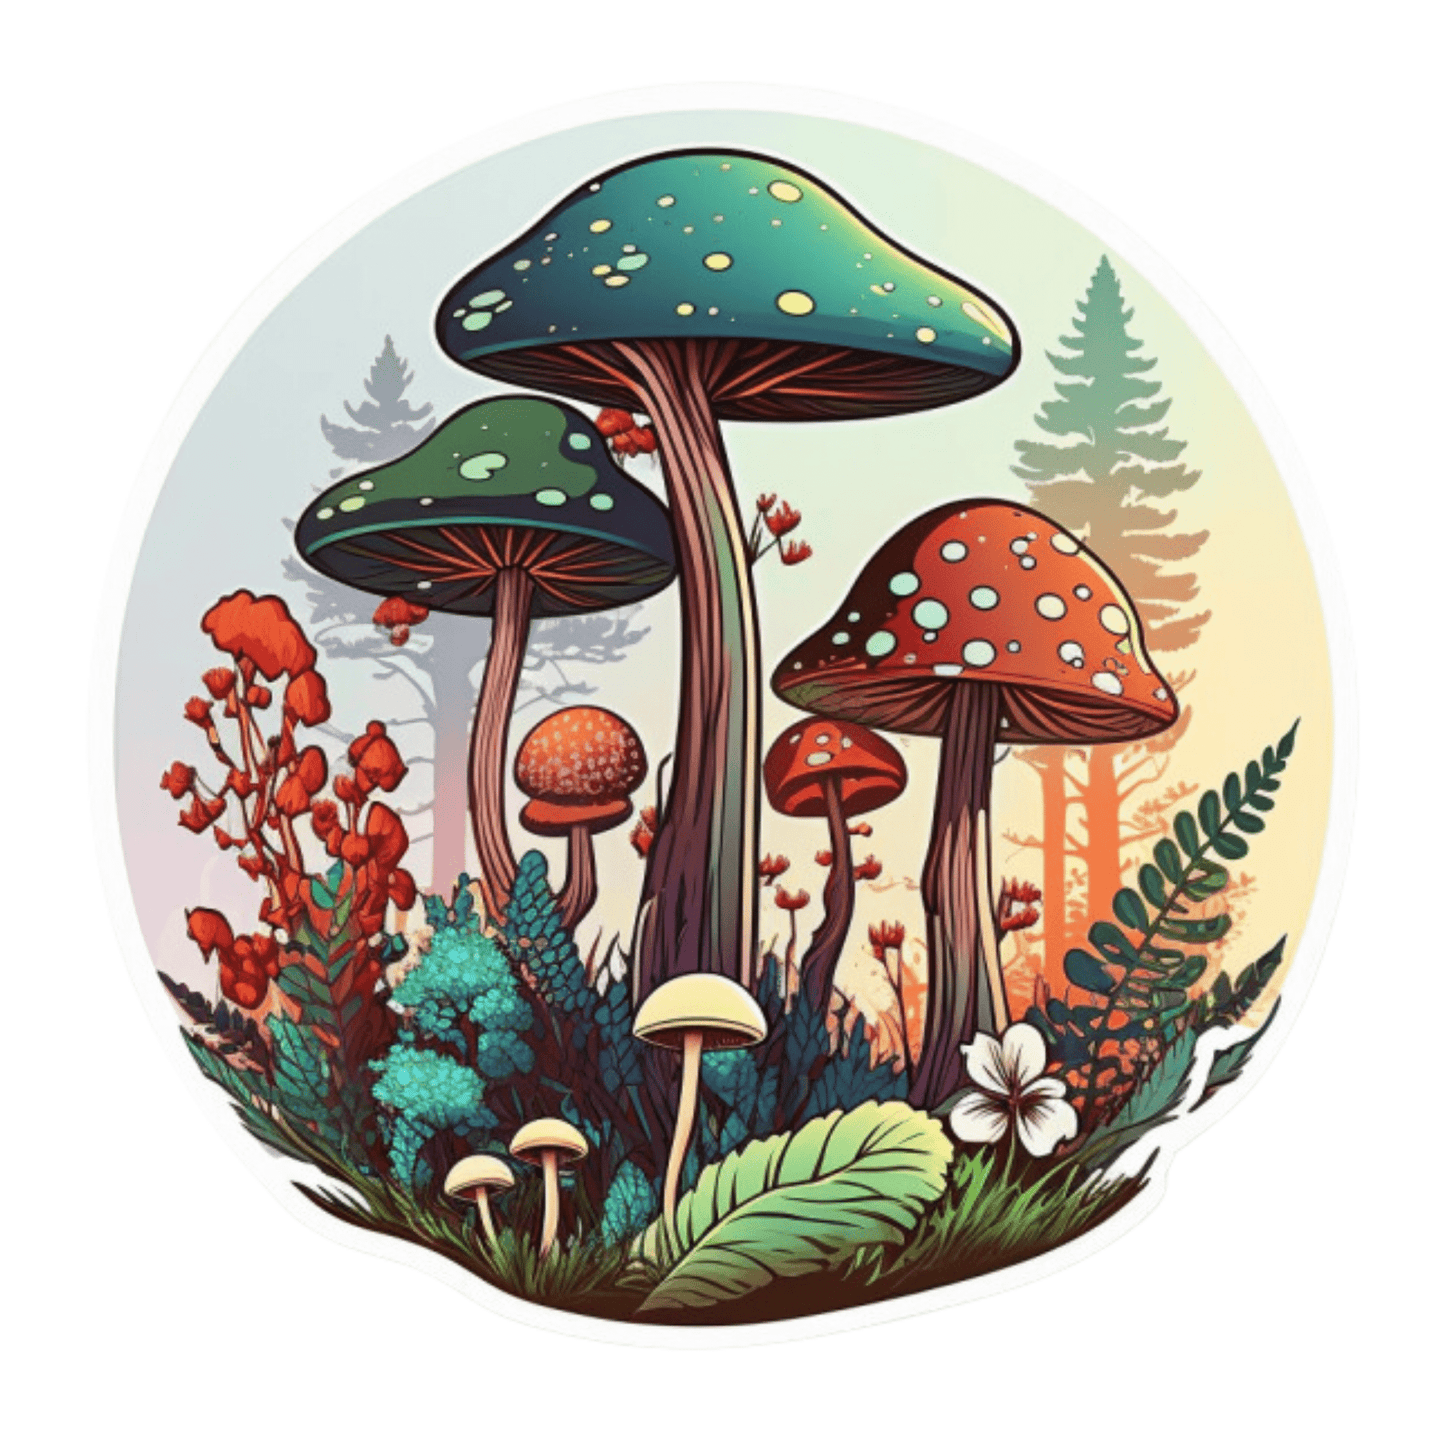 Mind-Bending Magical Mushroom Trip Images 2023 4 PNGs Set - Print on Demand Free Download - Instant Download Part 1